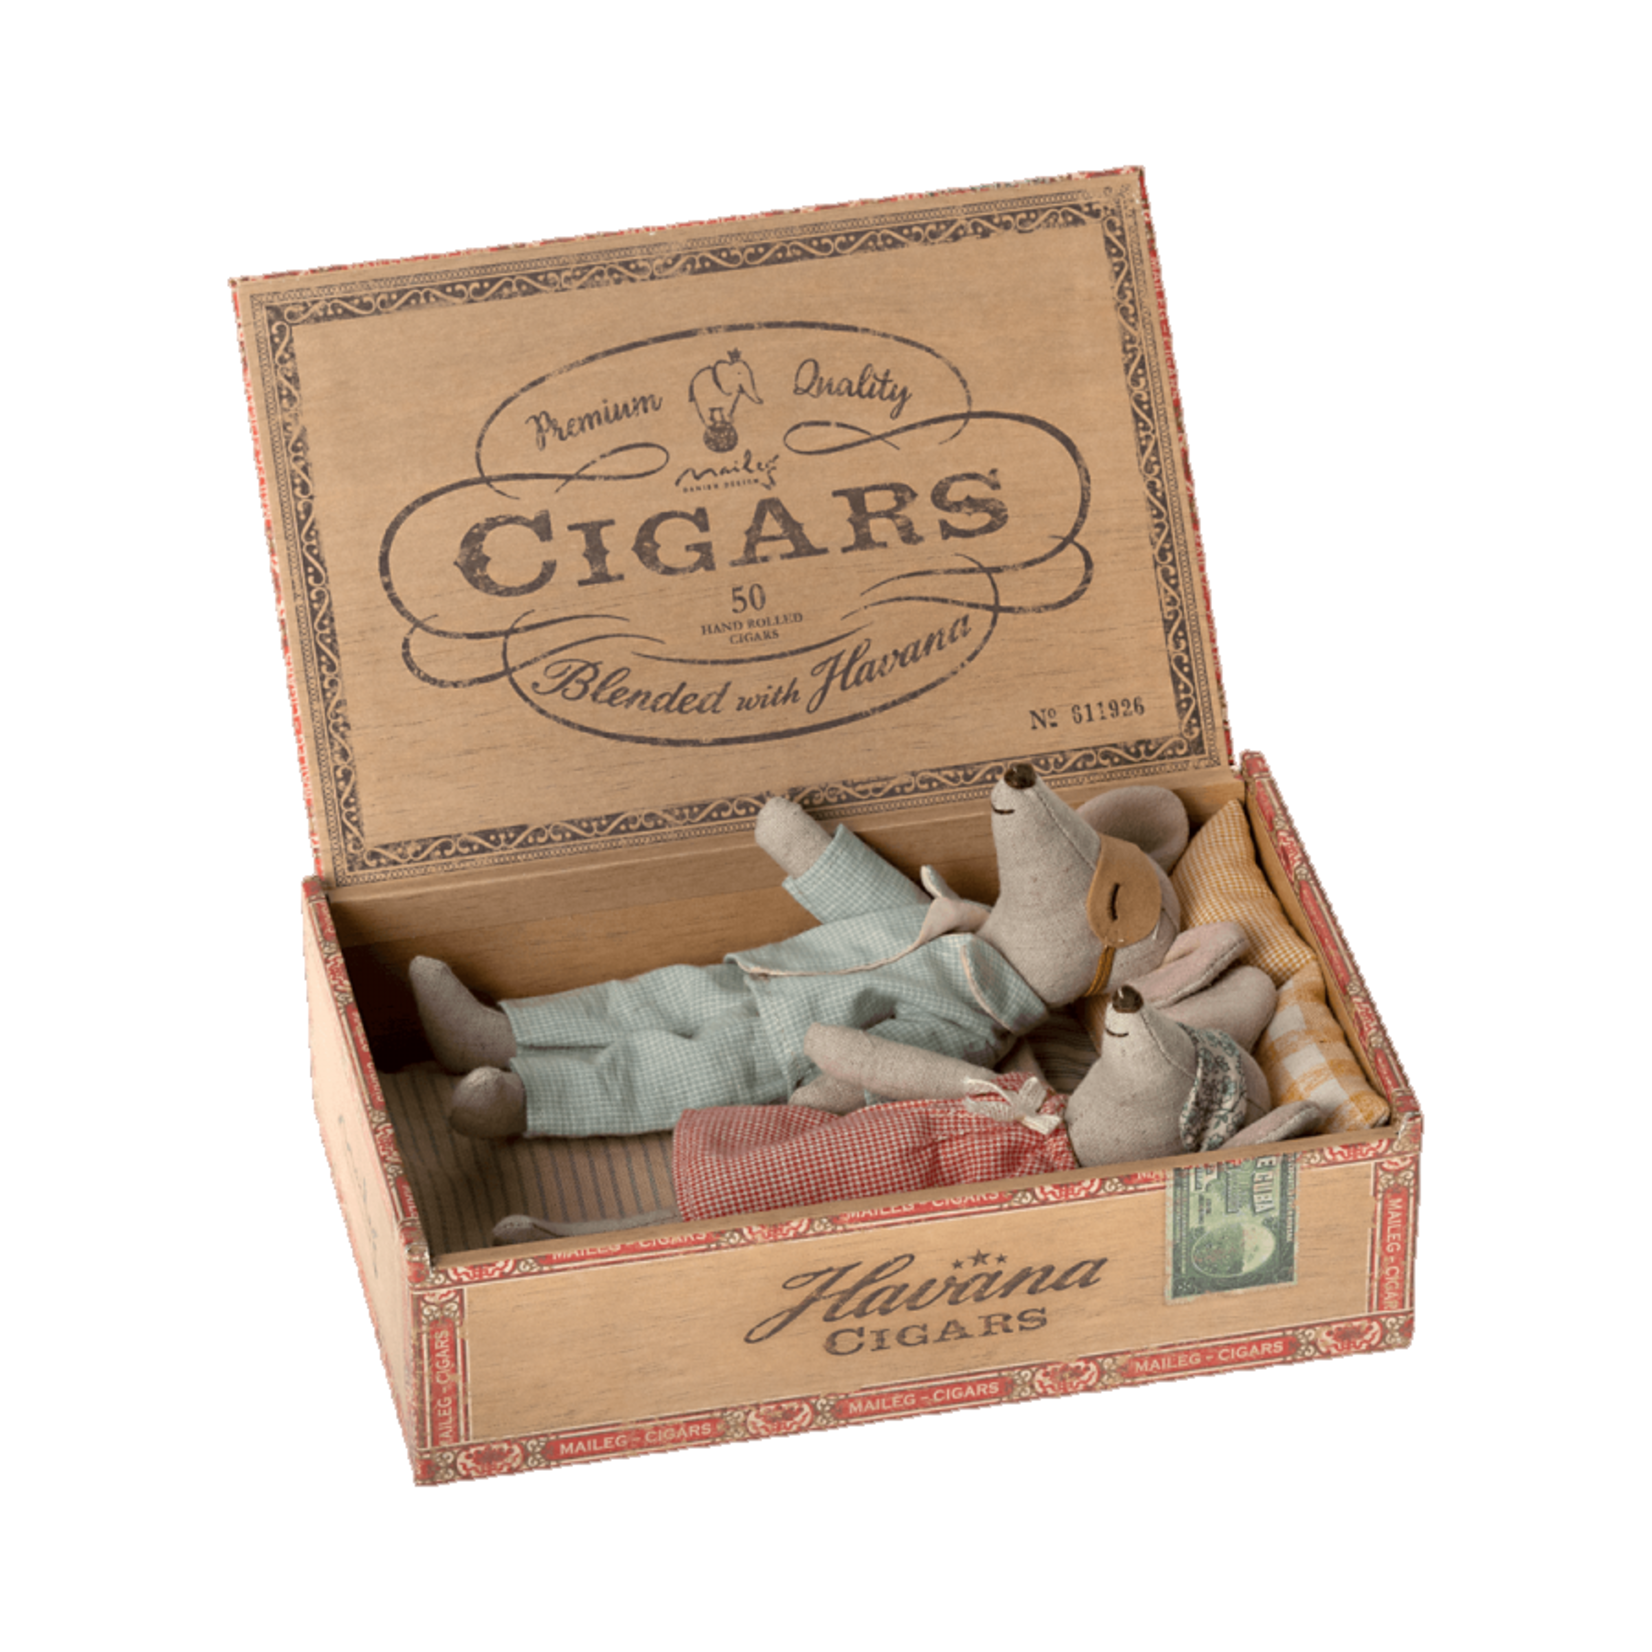 Maileg Maileg Mum and Dad in cigar box Matchbox